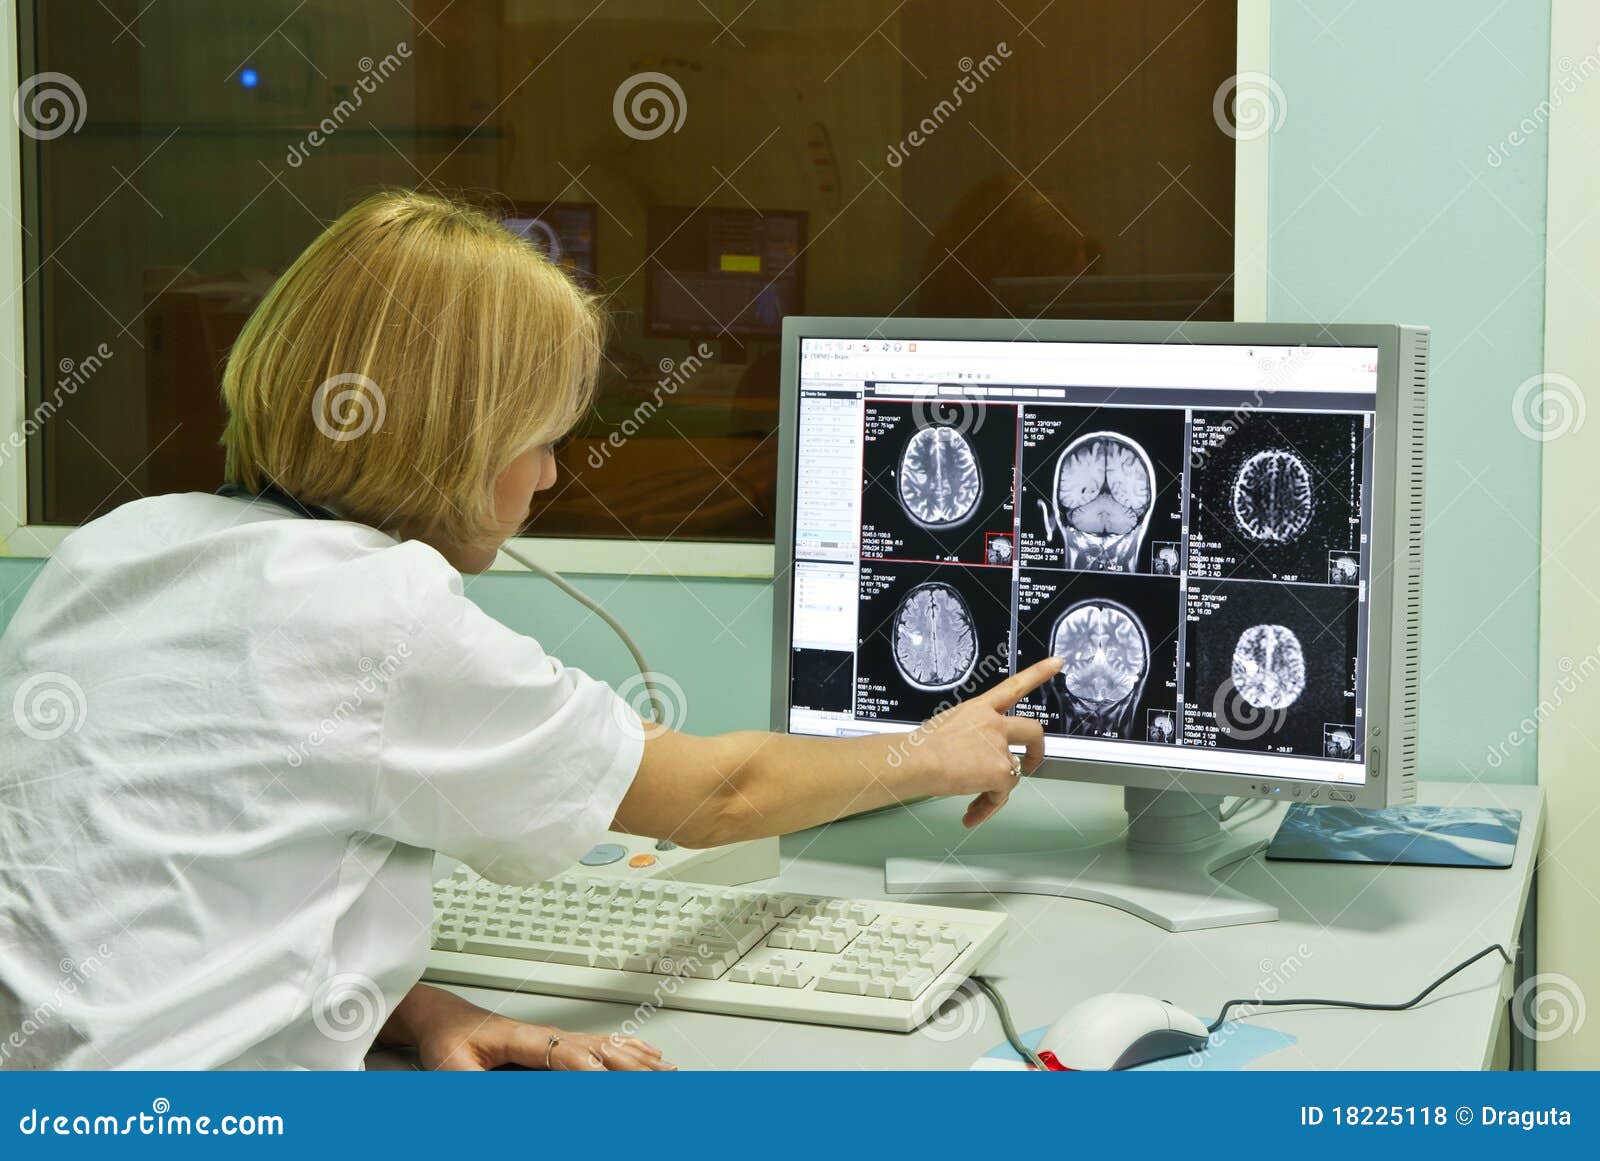 radiologist analyzing x-ray image